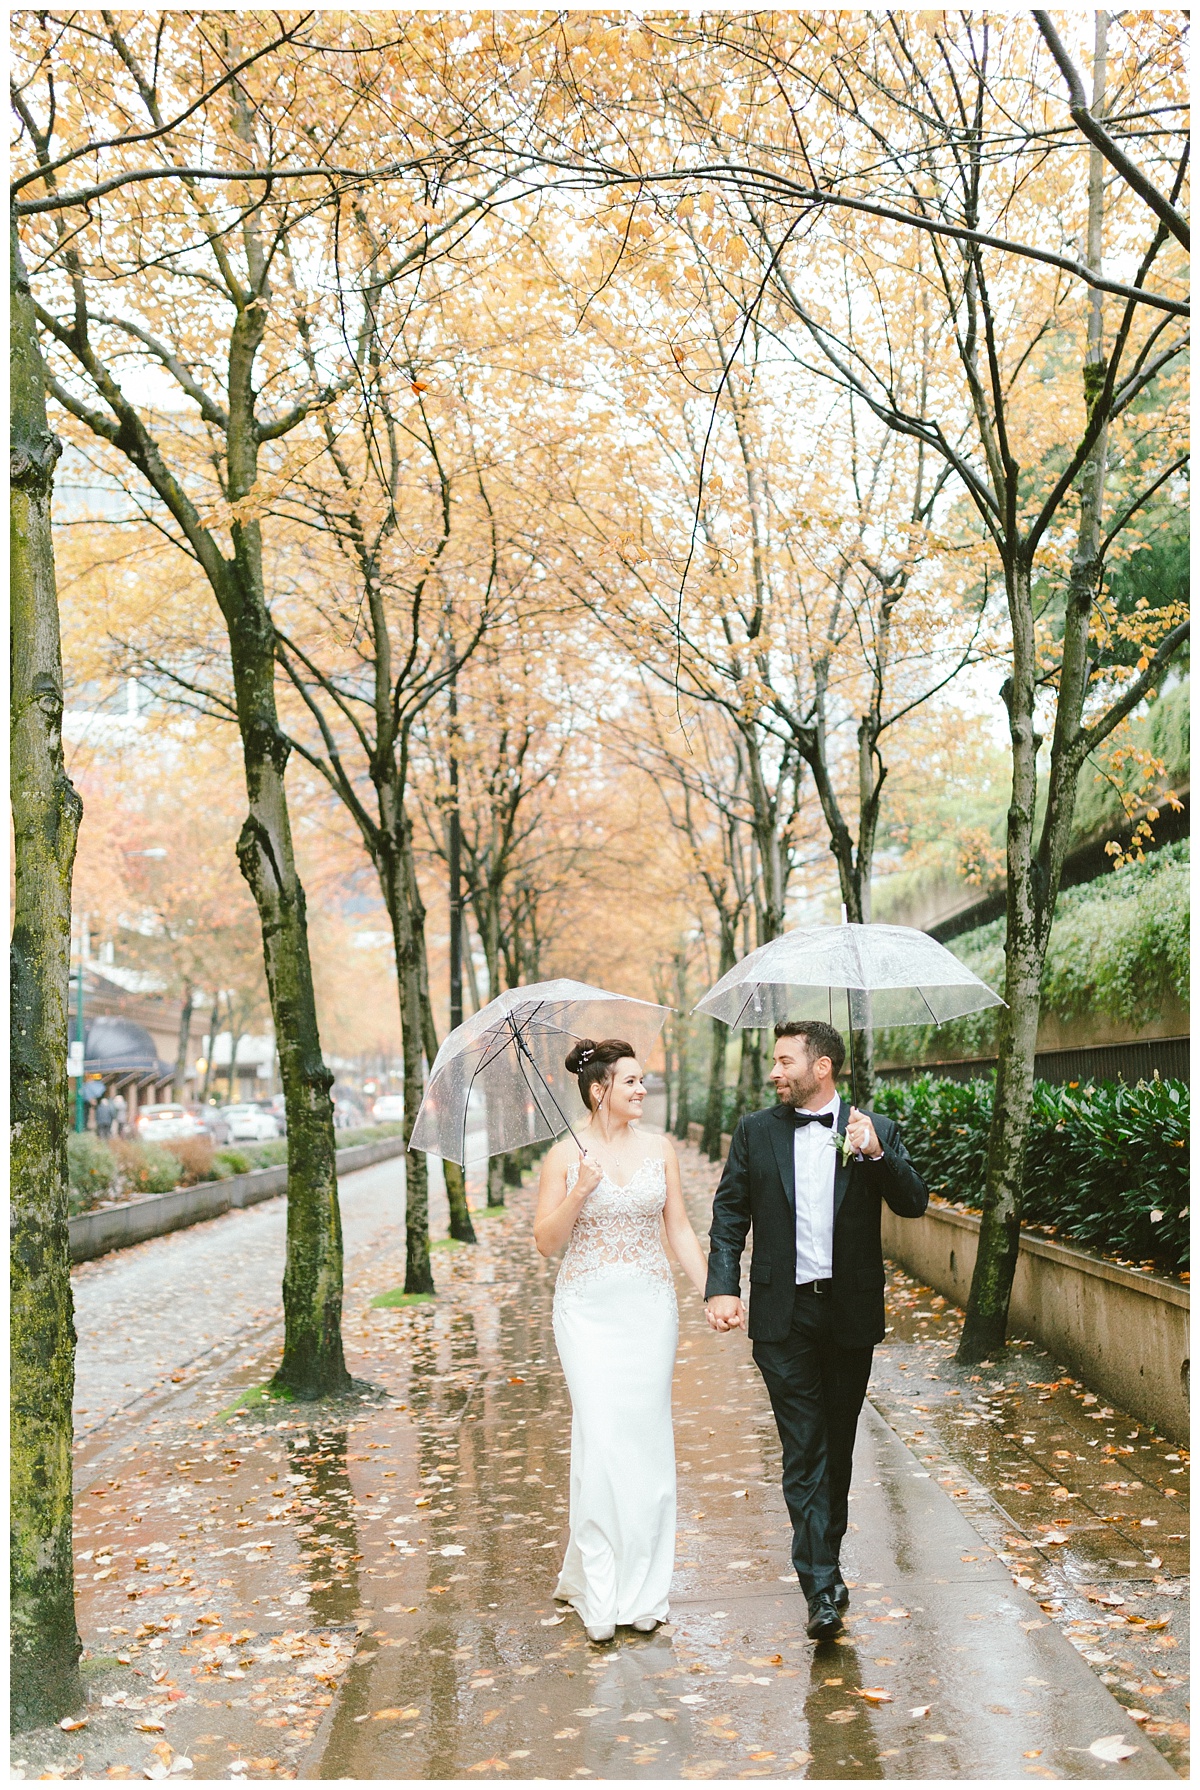  Fall Wedding prewedding photos downtown Vancouver BC (Robson Square) 